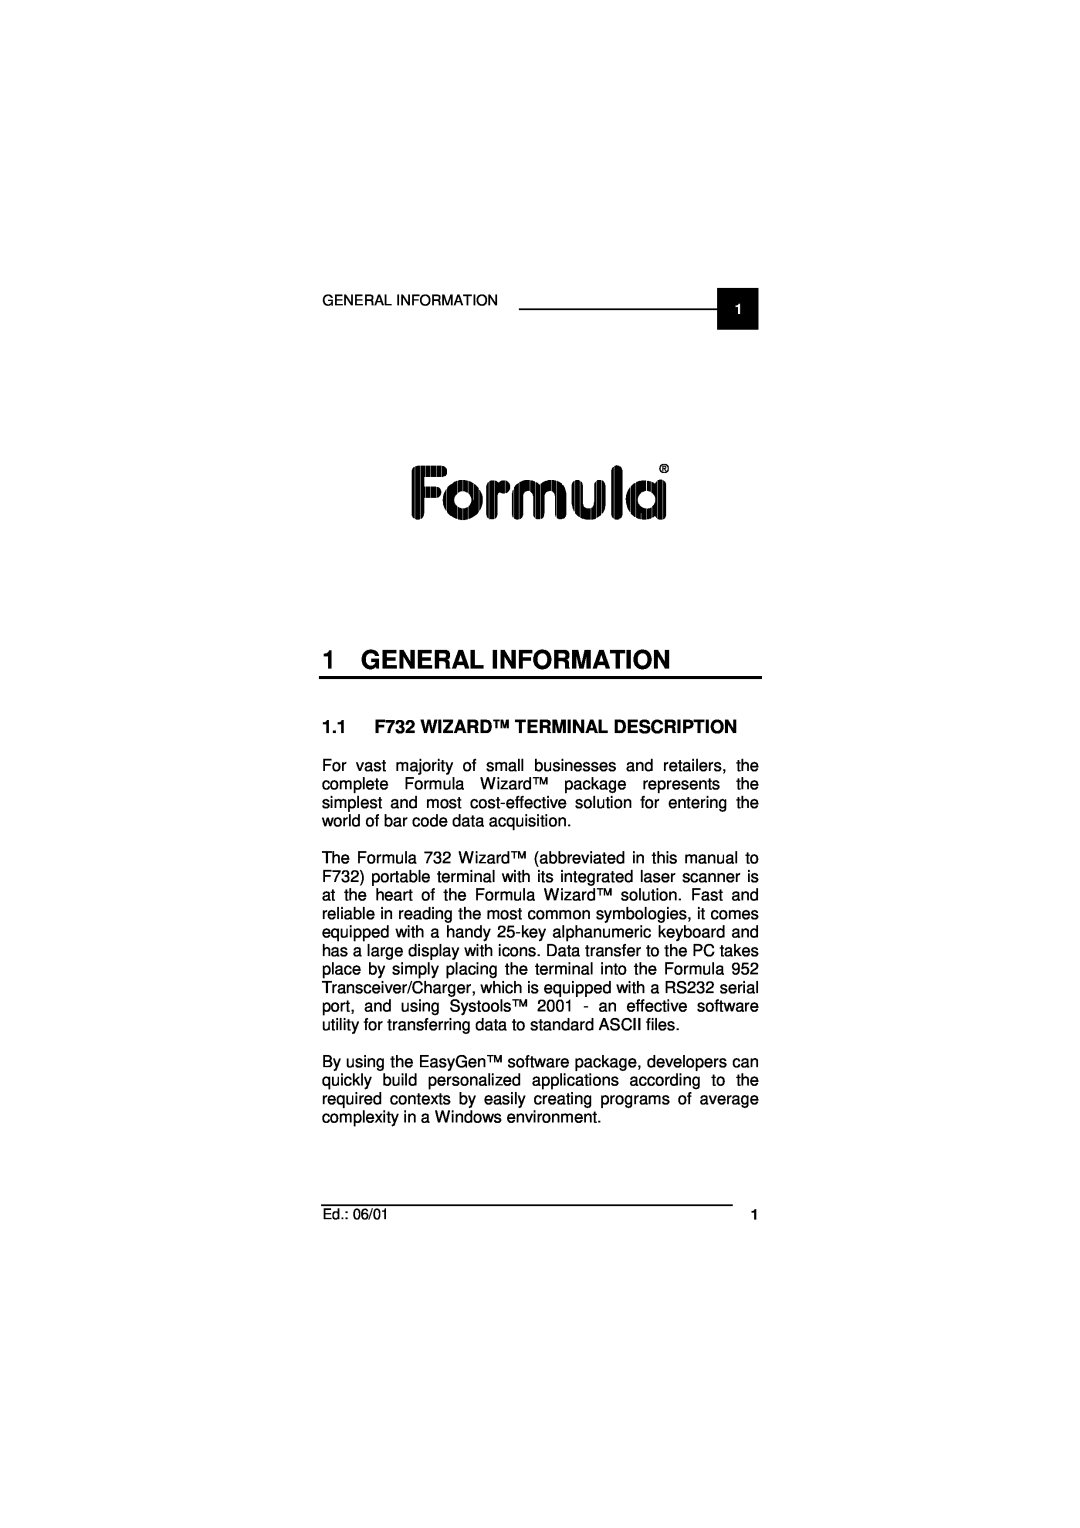 Datalogic Scanning user manual General Information, 1.1 F732 WIZARD TERMINAL DESCRIPTION 